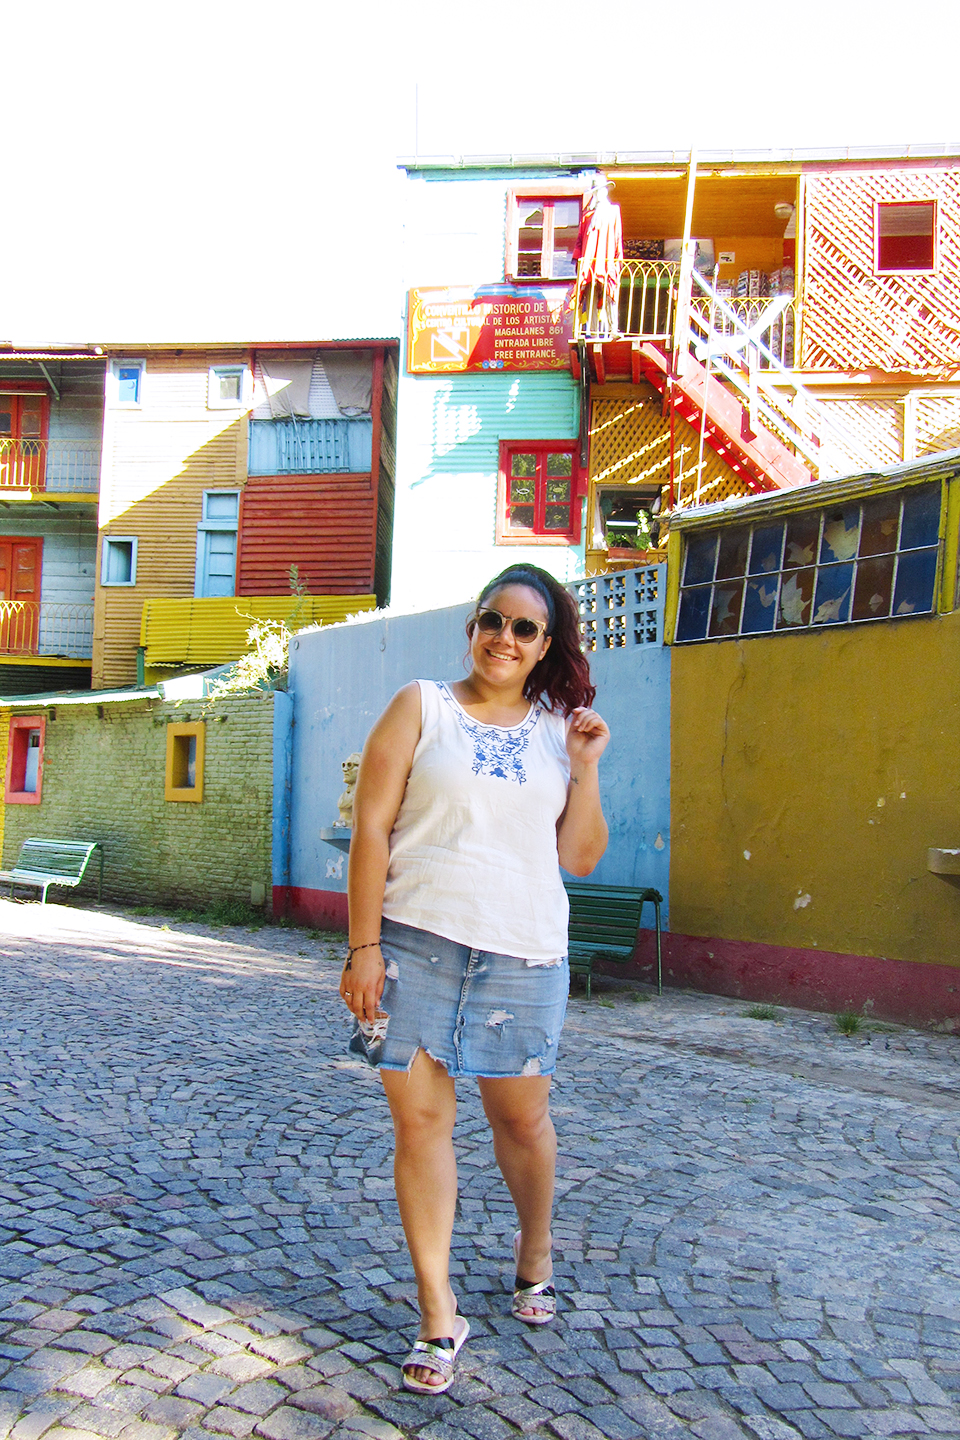 caminito_argentina_buenos-aires_colores_casas_cultura_verano_viaje_summer_denim_skirt_mexican_blogger_white_top